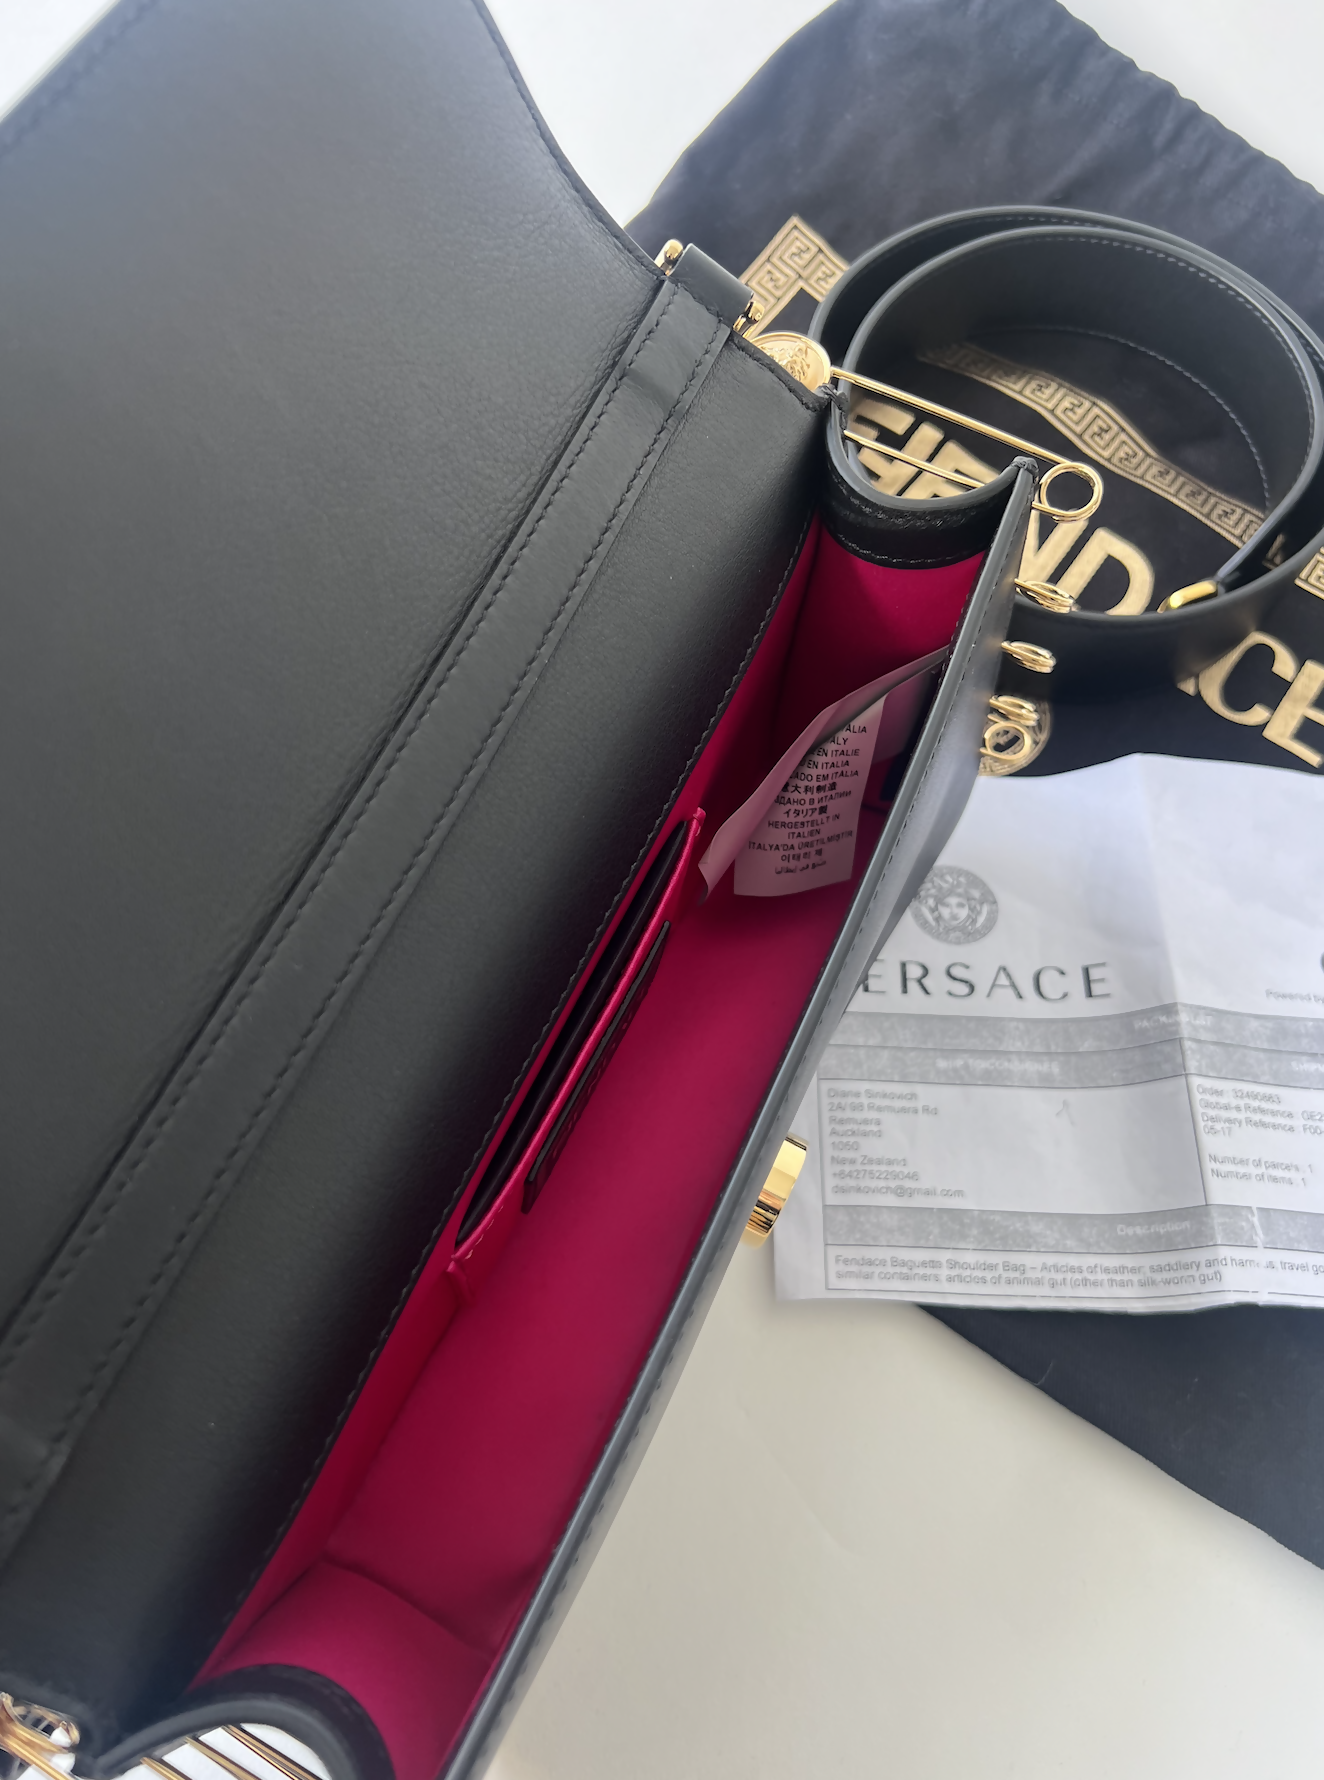 Fendi X Versace Fendace Gradient Crystal Baguette Shoulder Bag at